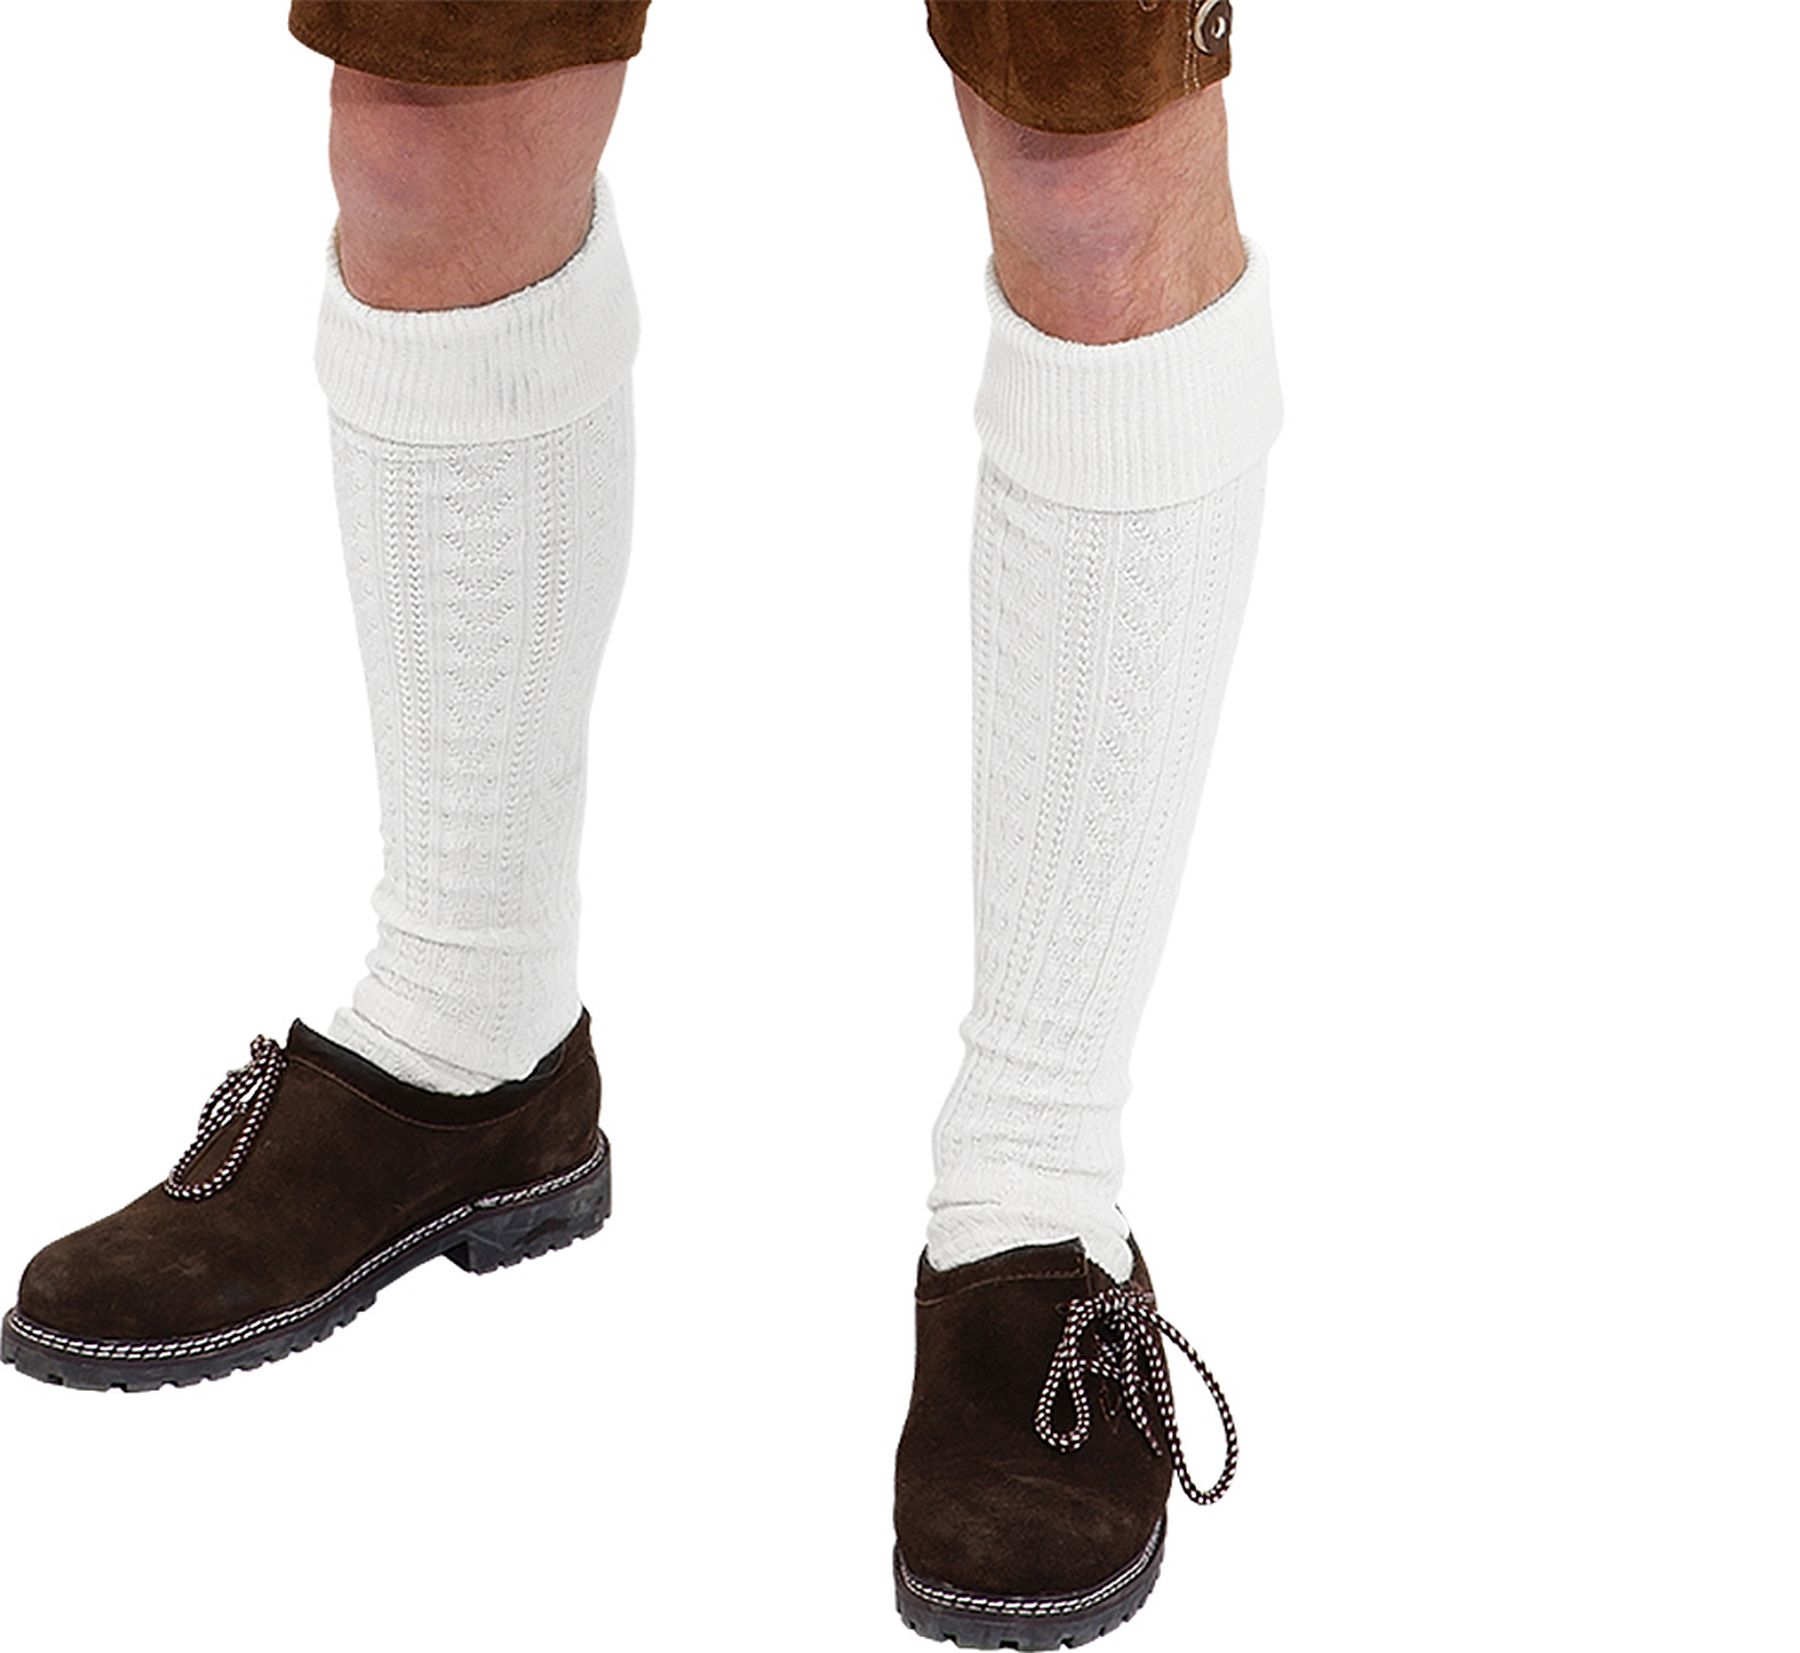 Kneehighs socks, white